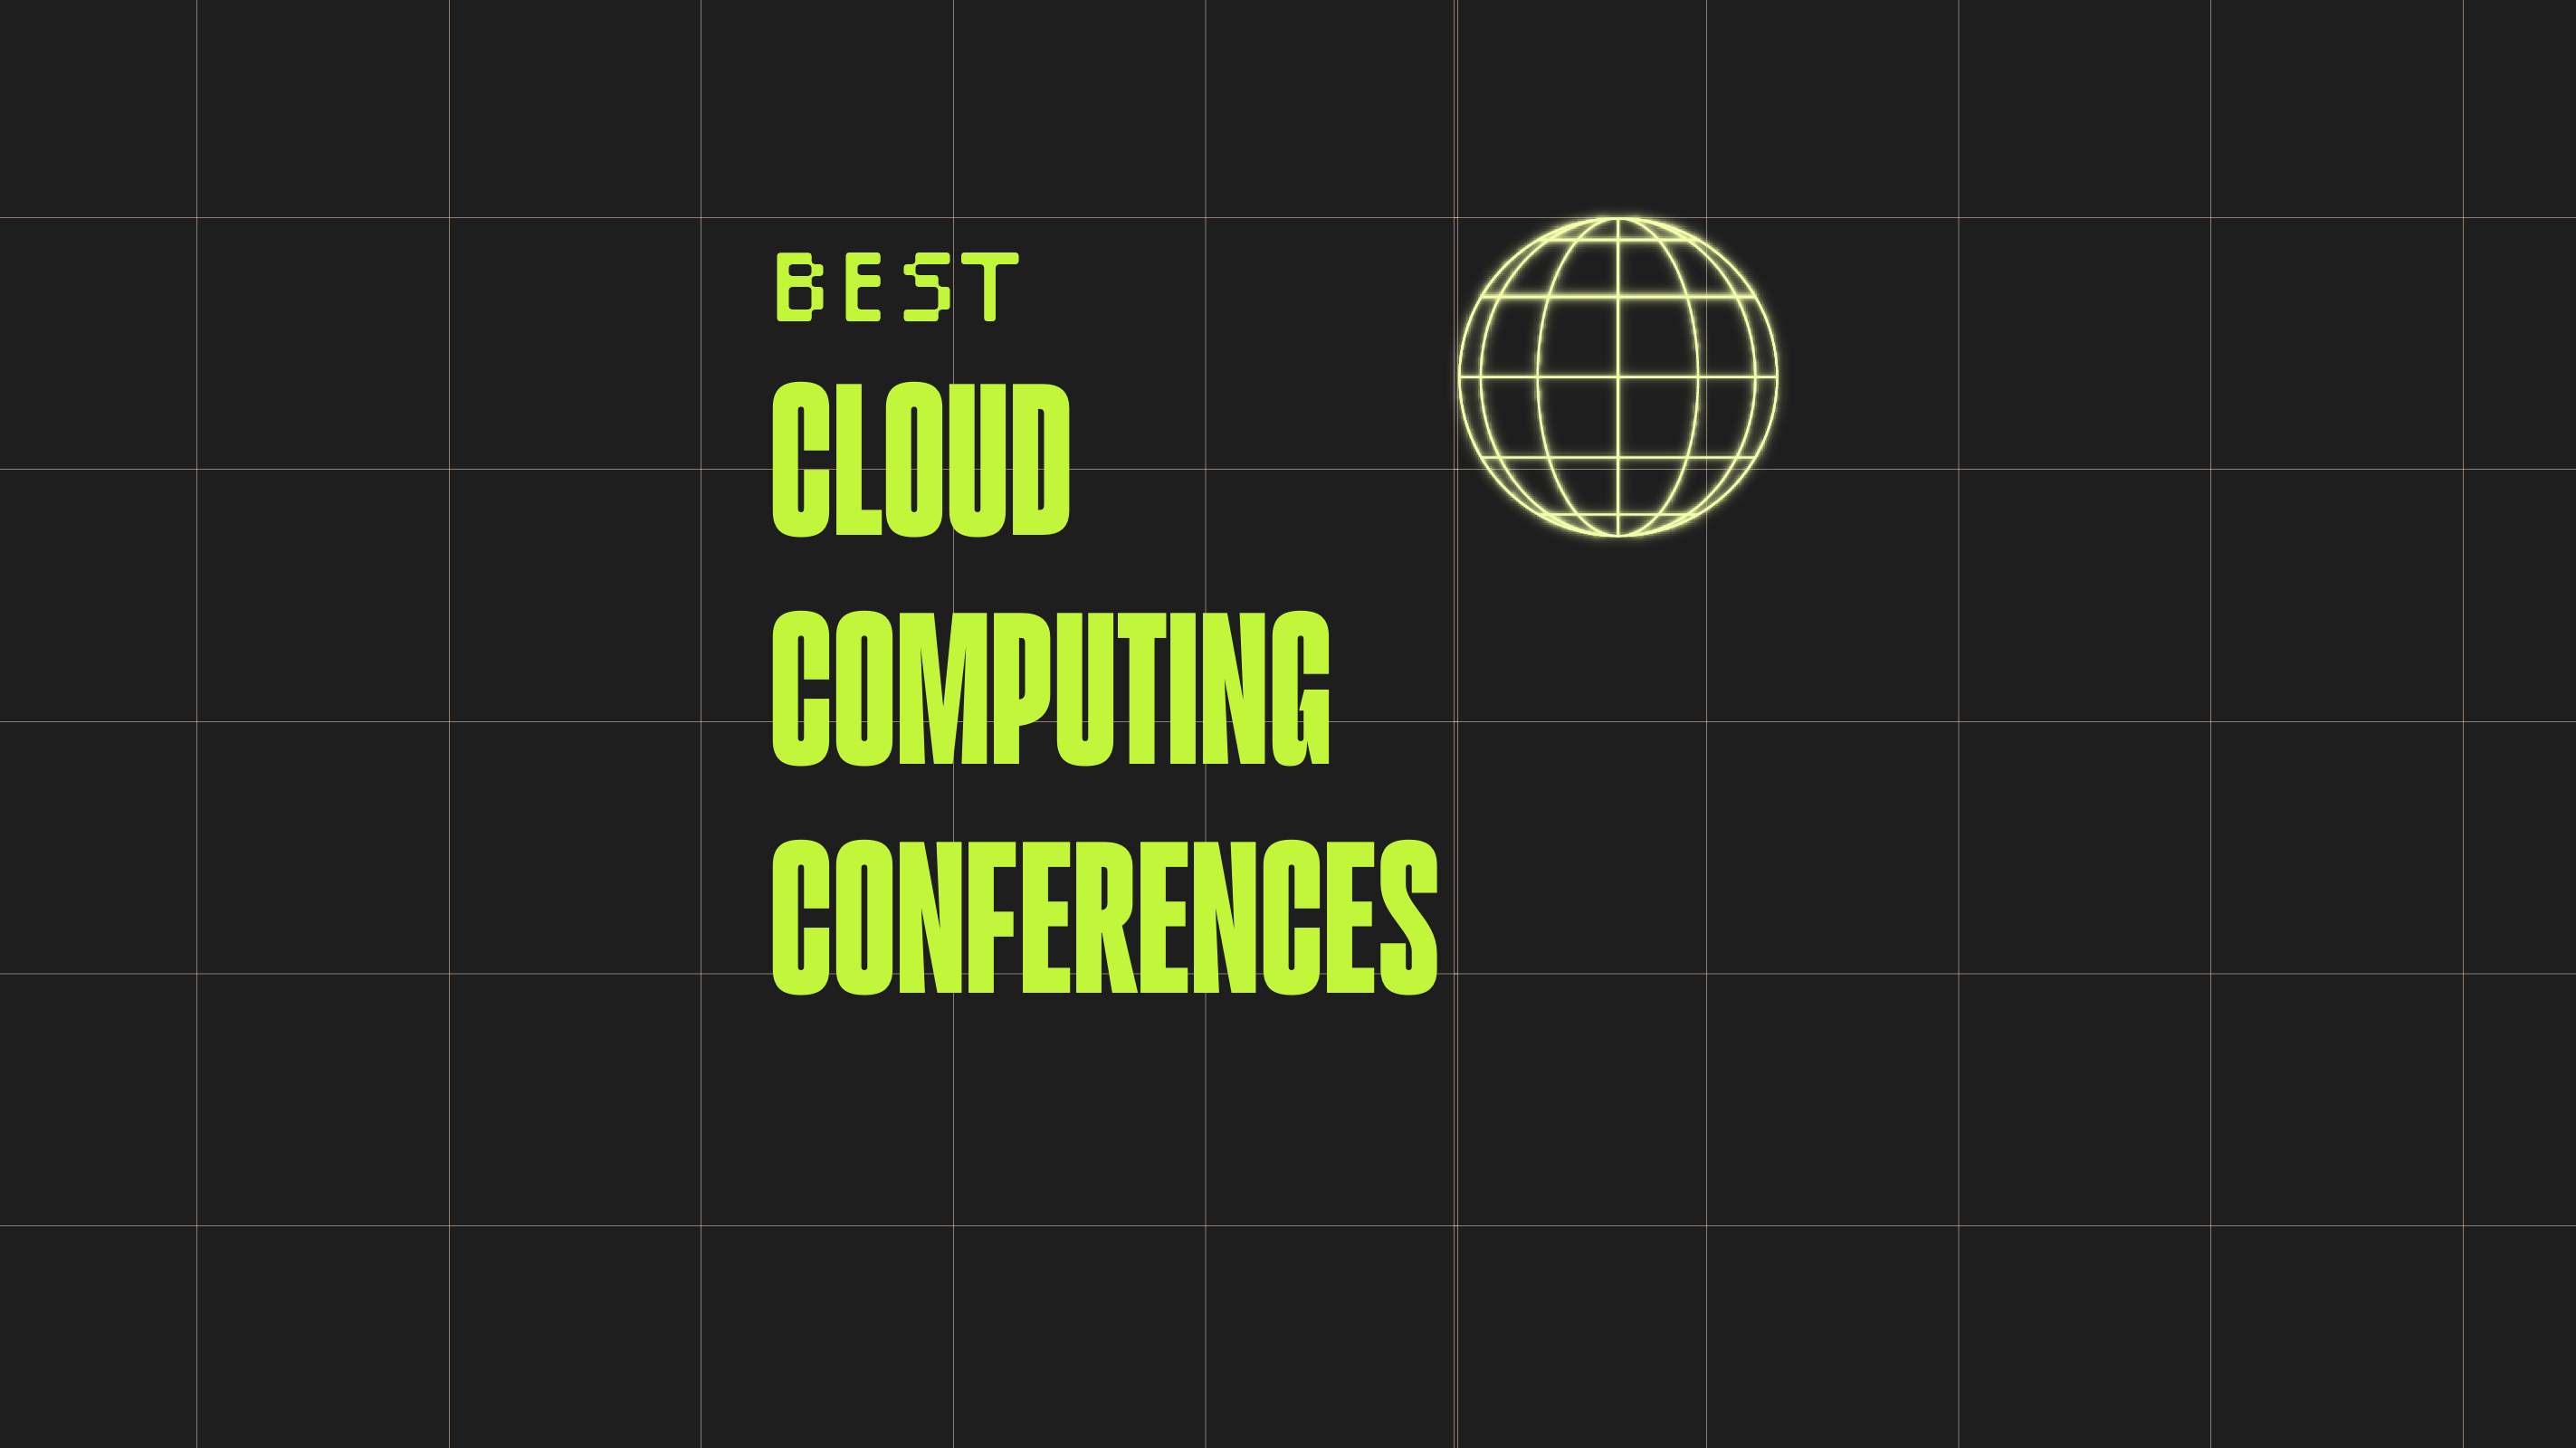 Cloud computing conferences best events